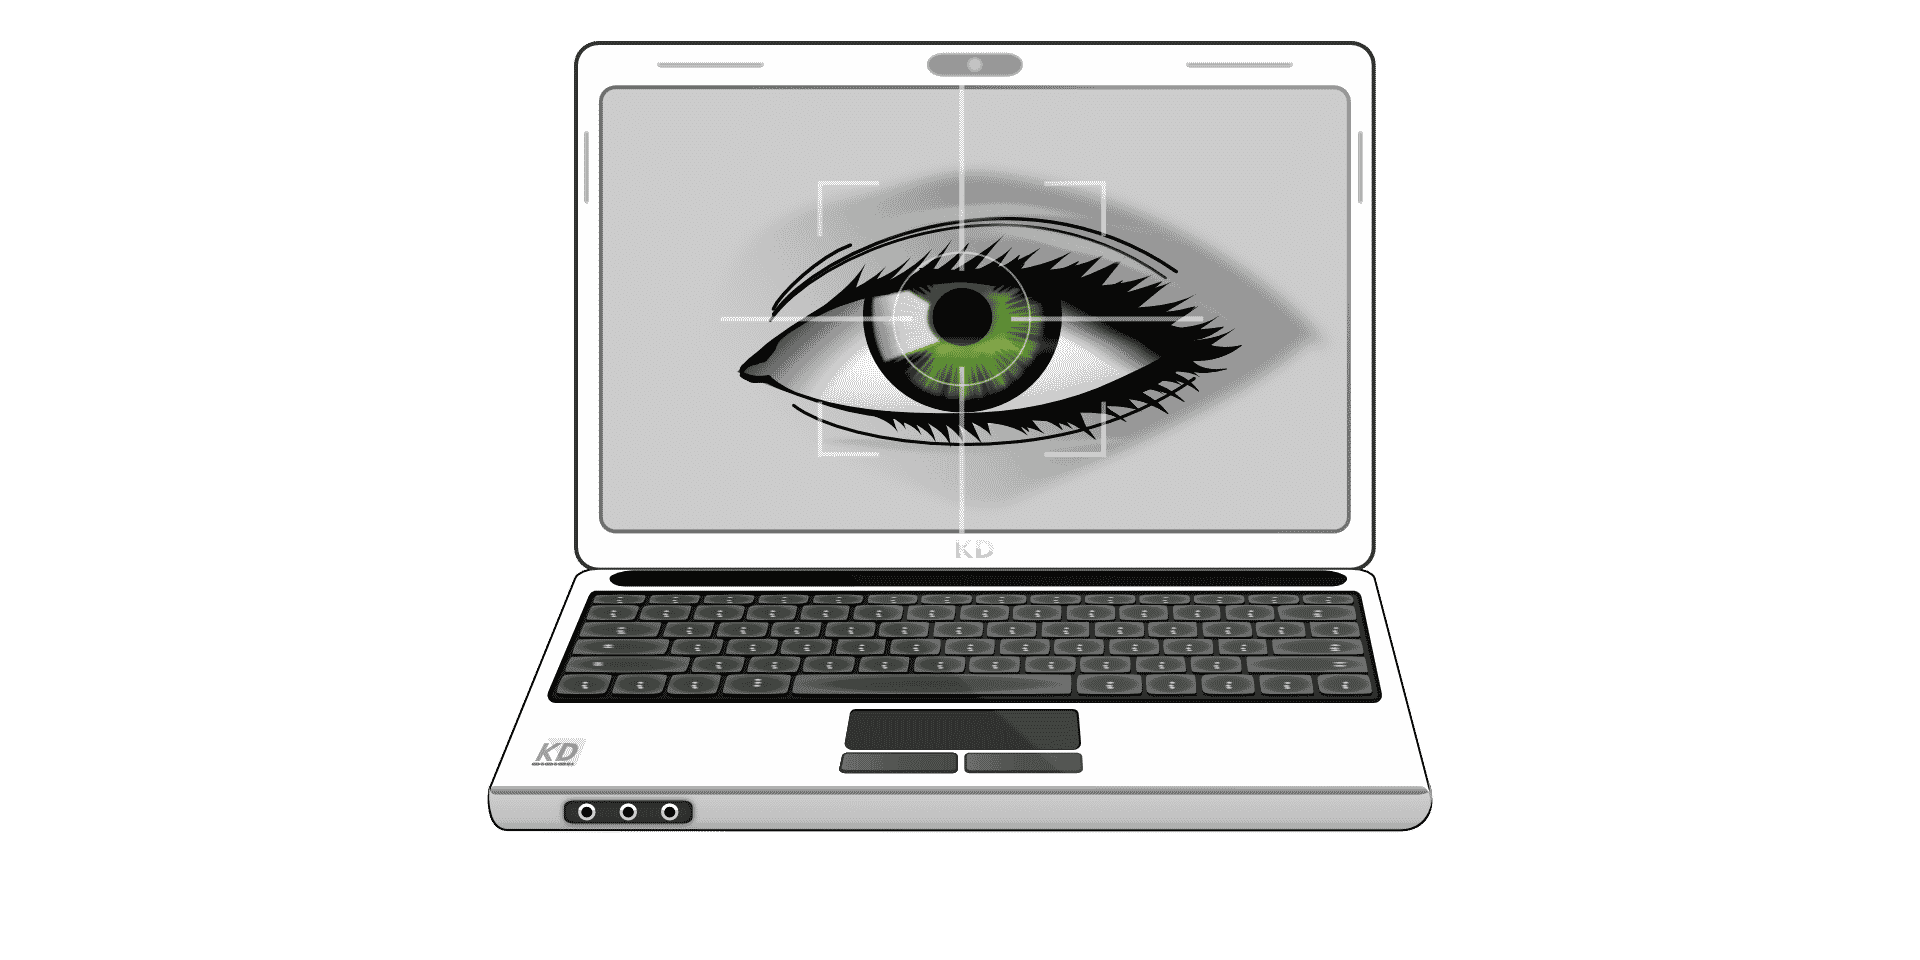 How To Use Laptop Webcam As Spy Camera